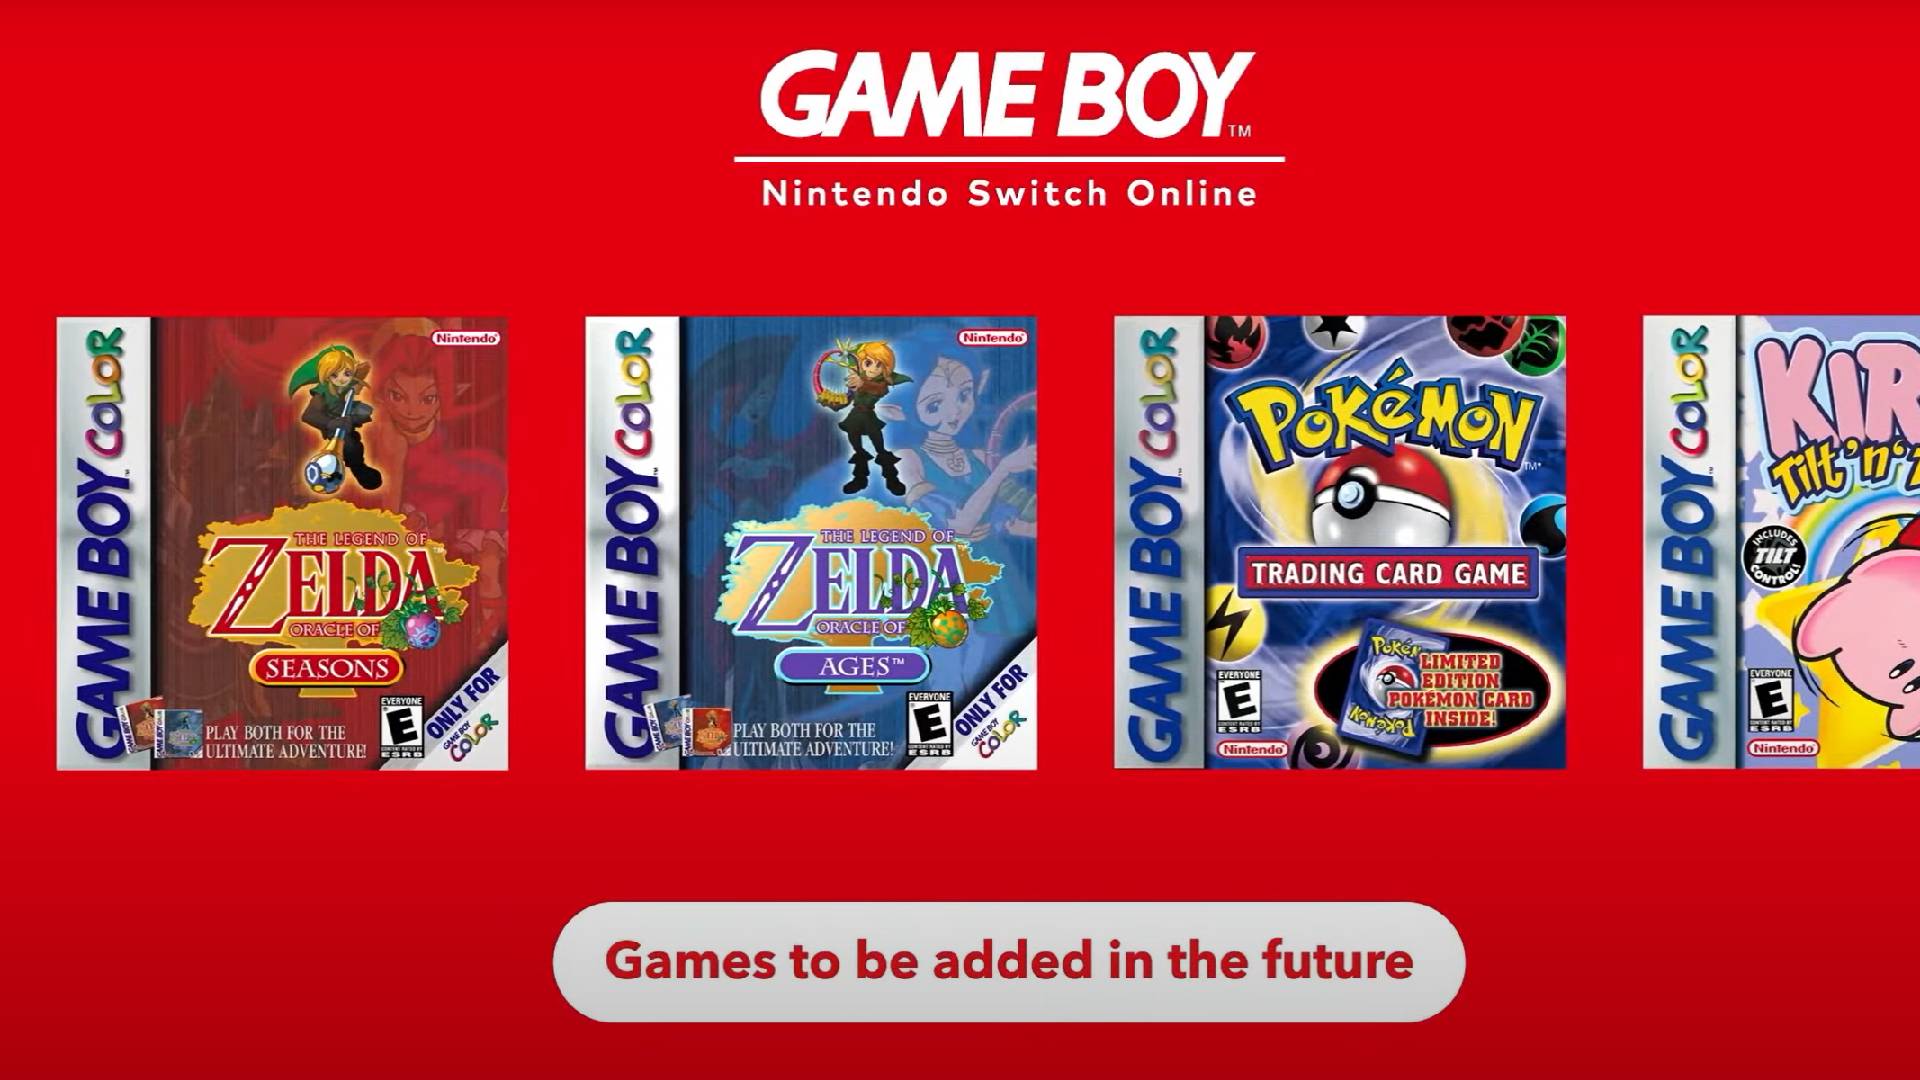 Game Boy Advance - Nintendo Switch Online adds Super Mario Advance